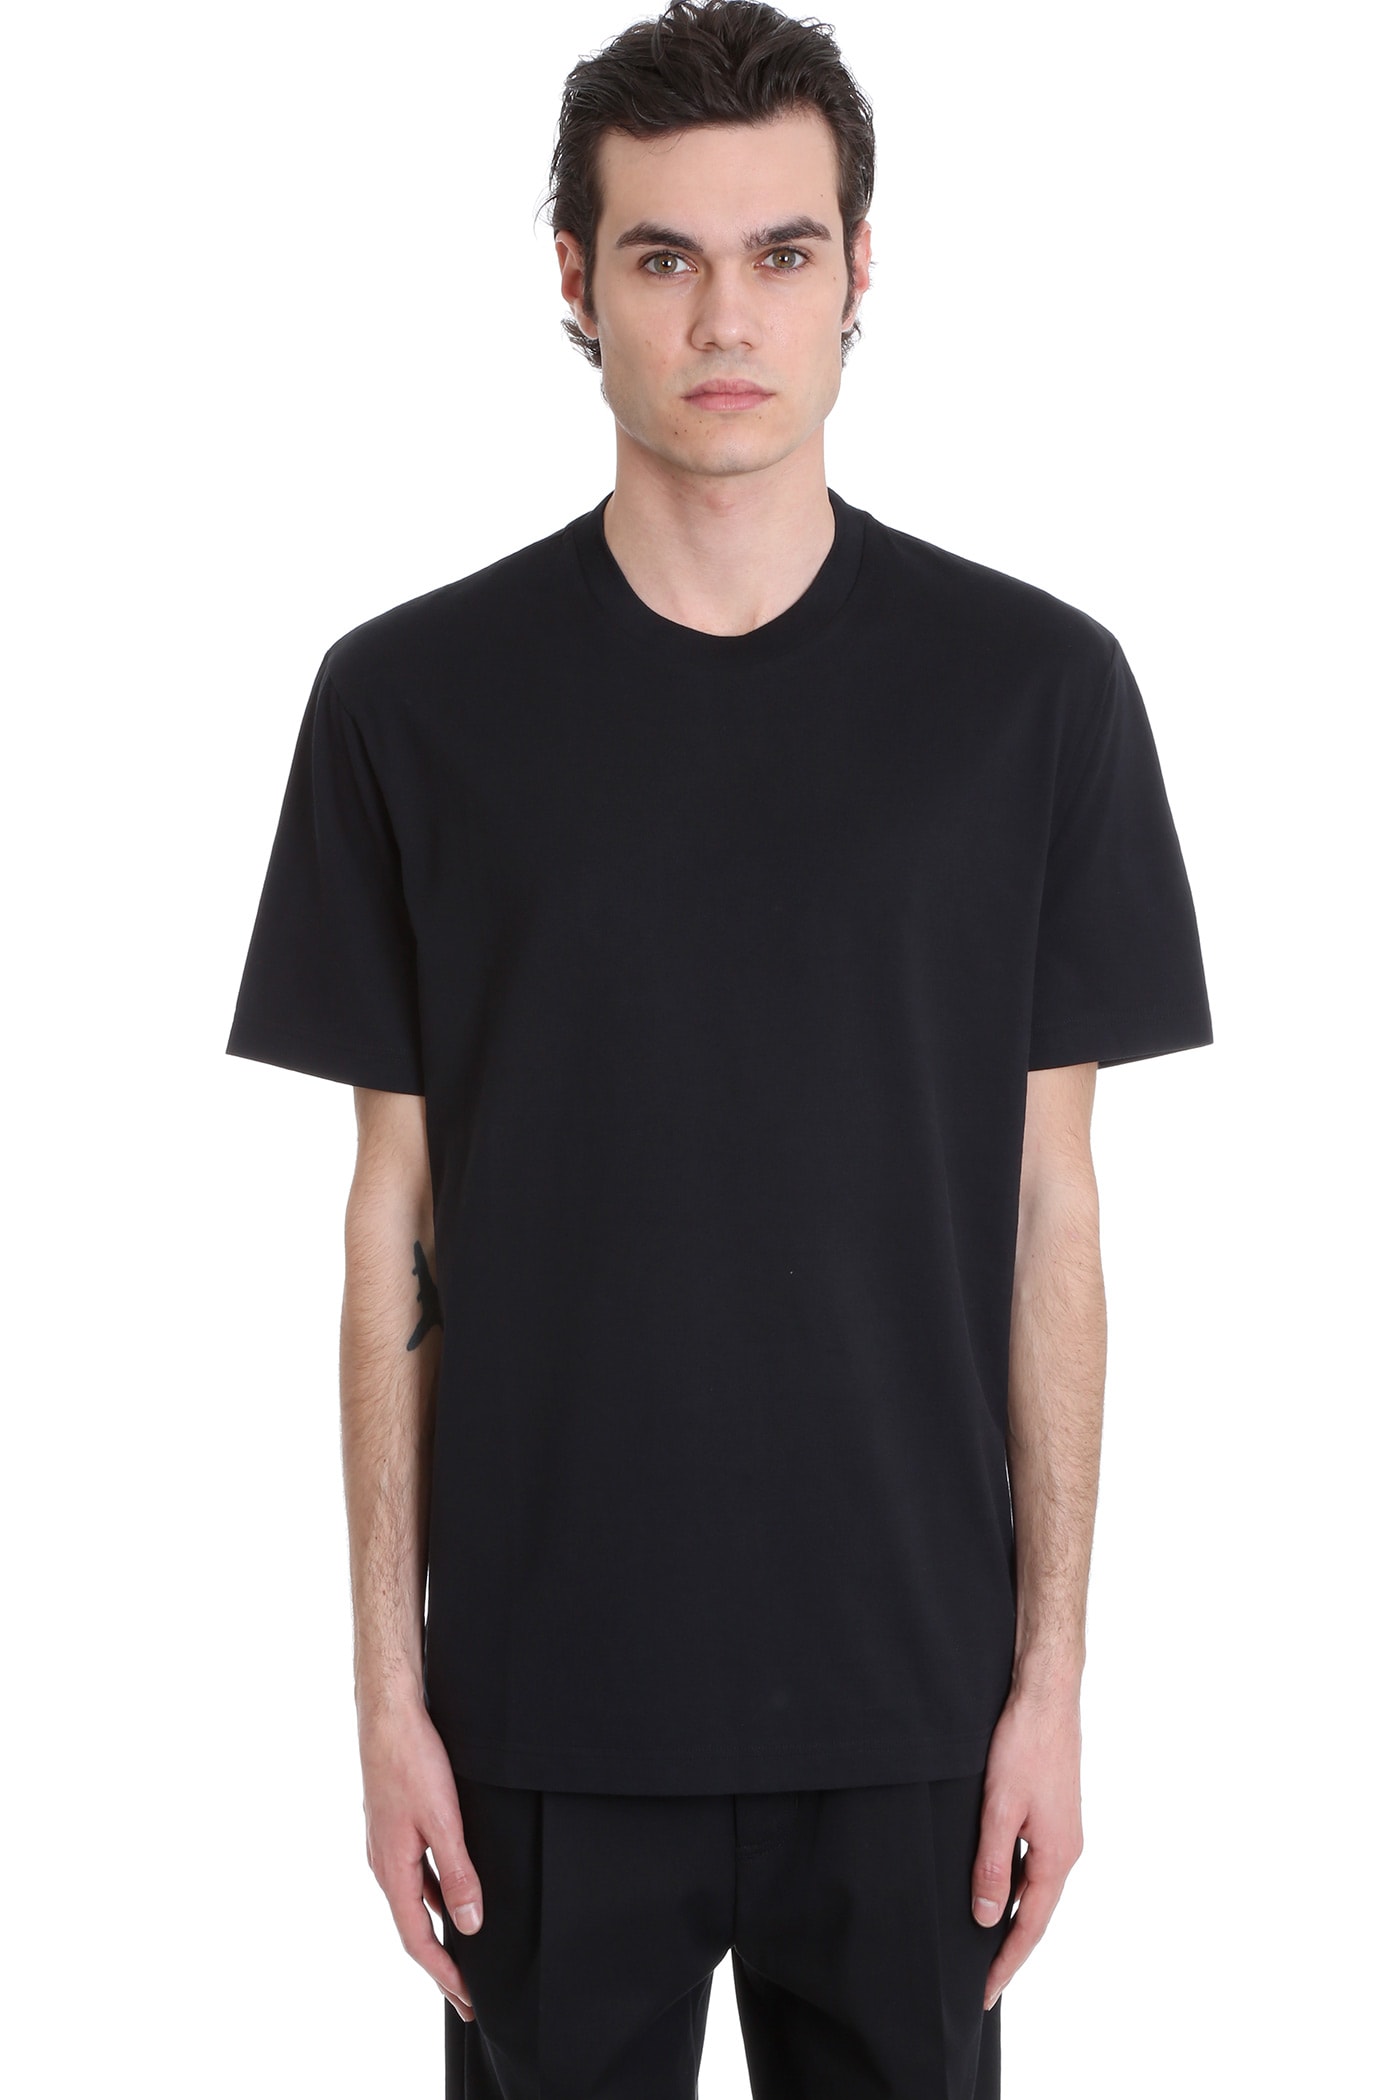 Acne Studios Everrick T-shirt In Black Cotton